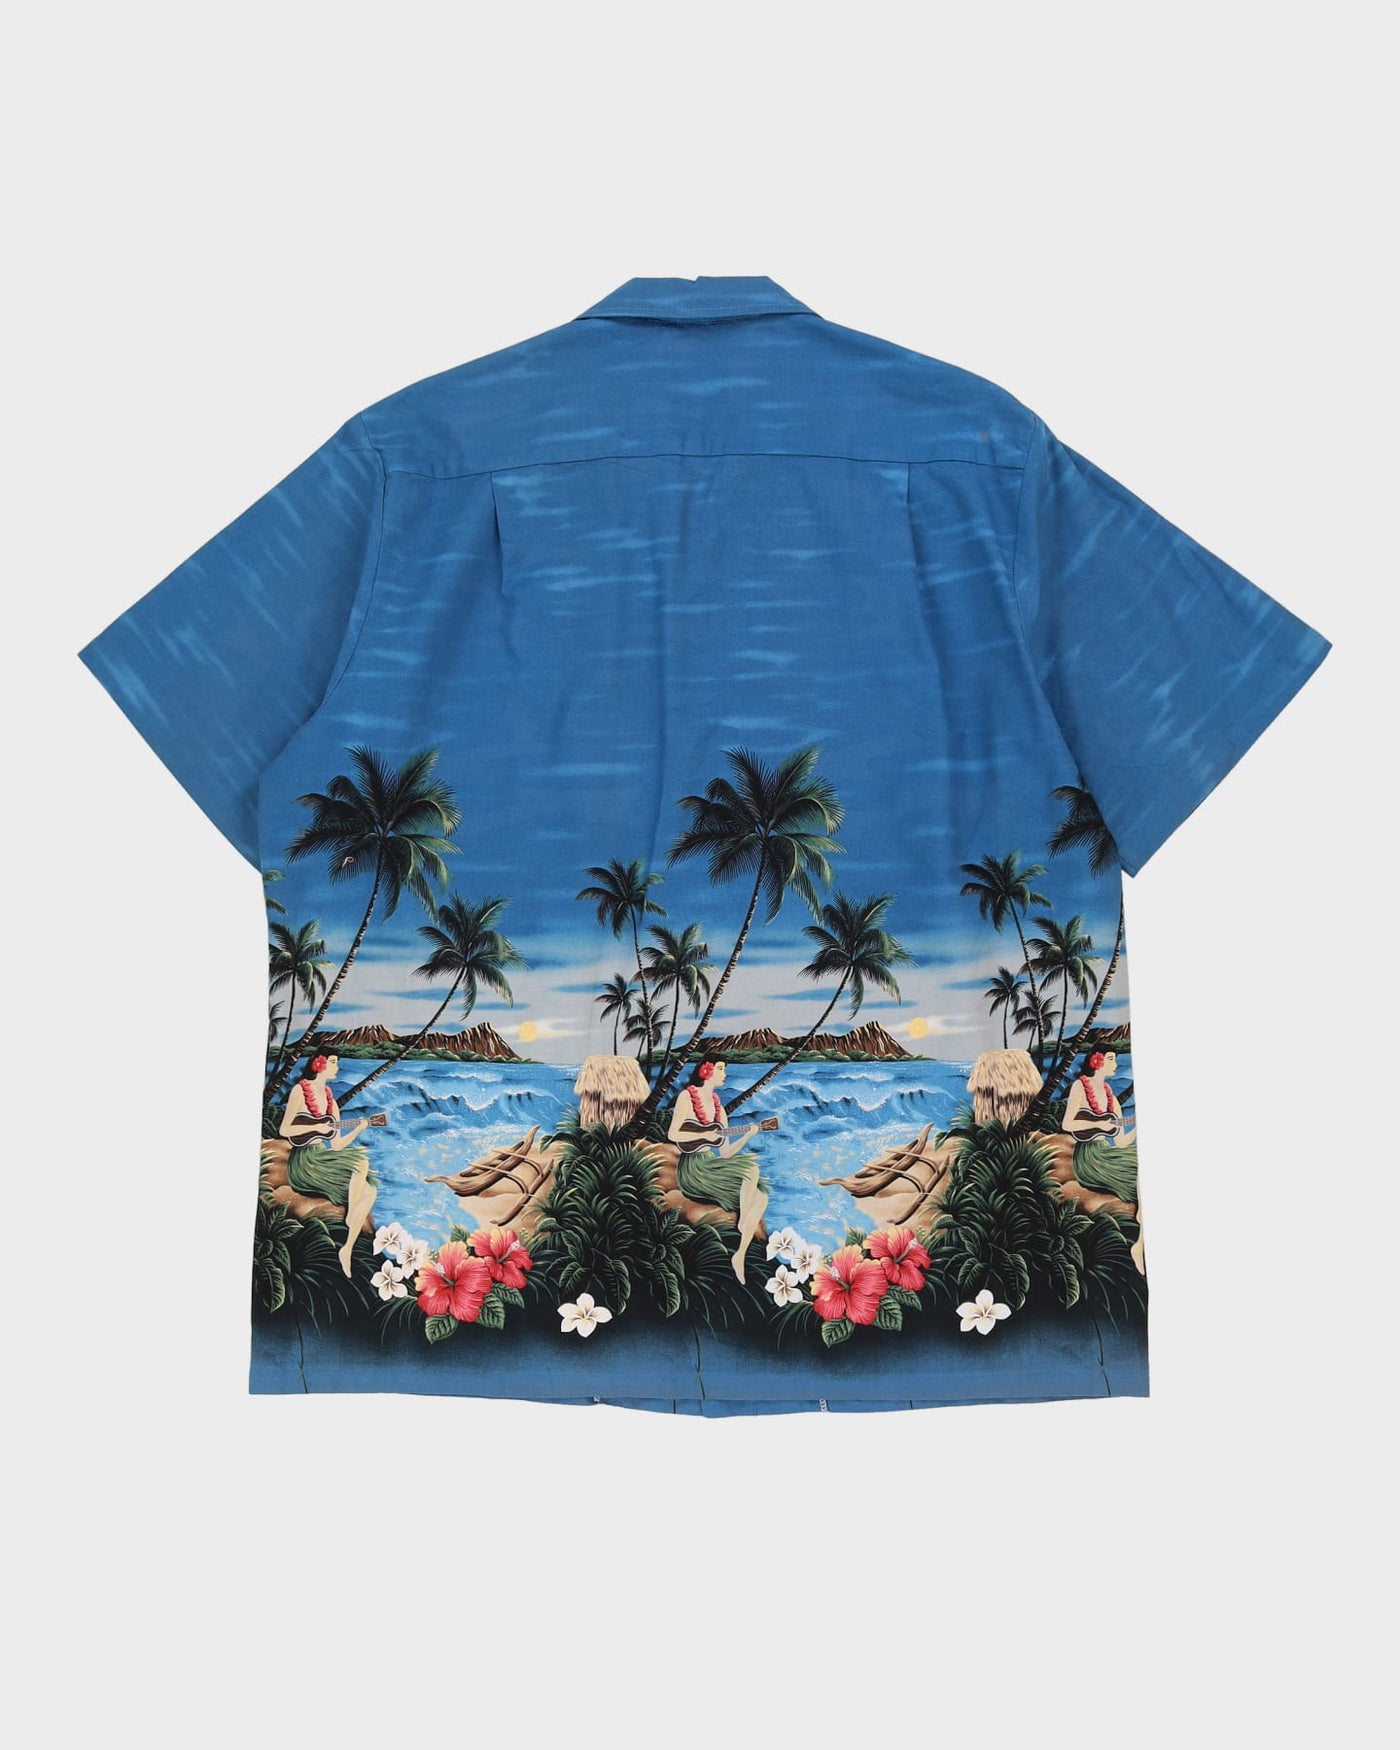 Vintage 90s RJC Blue Island Print Hawaiian Shirt - XL